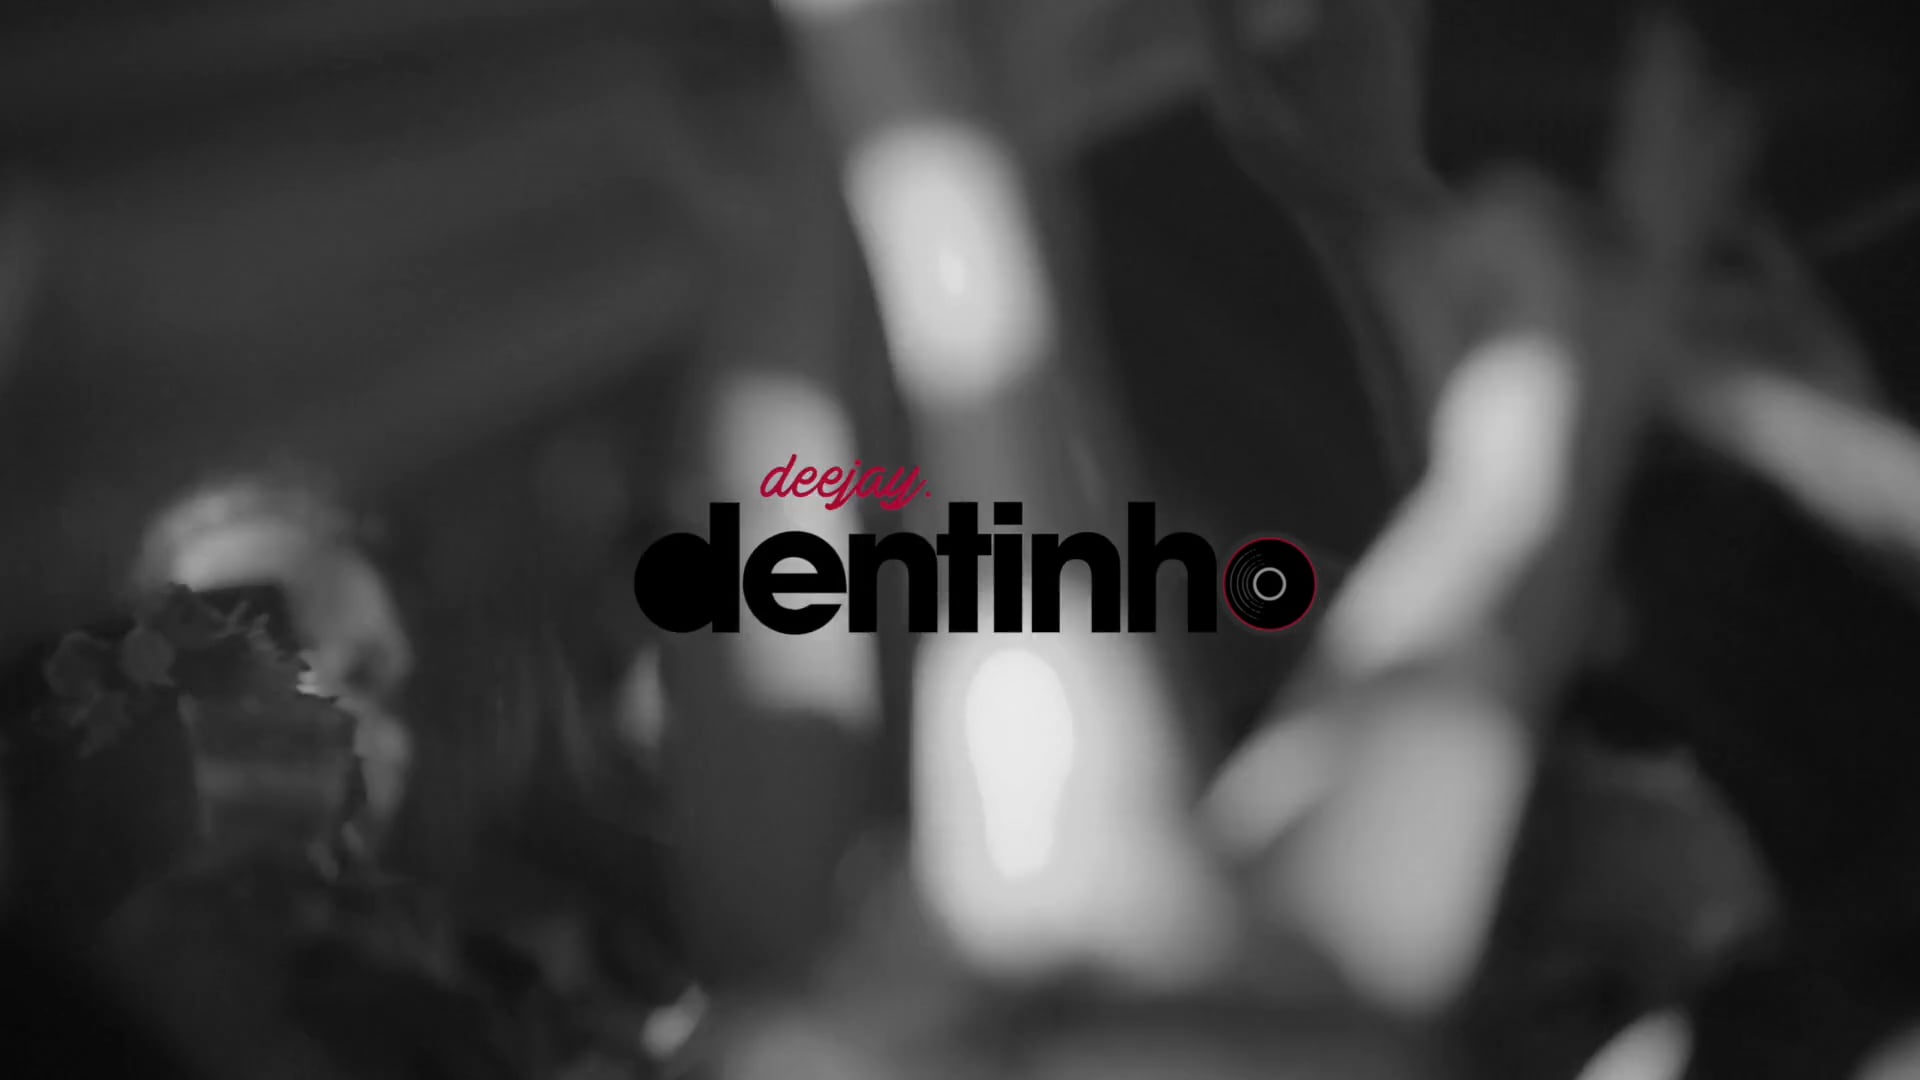 Playbak - DJ Dentinho